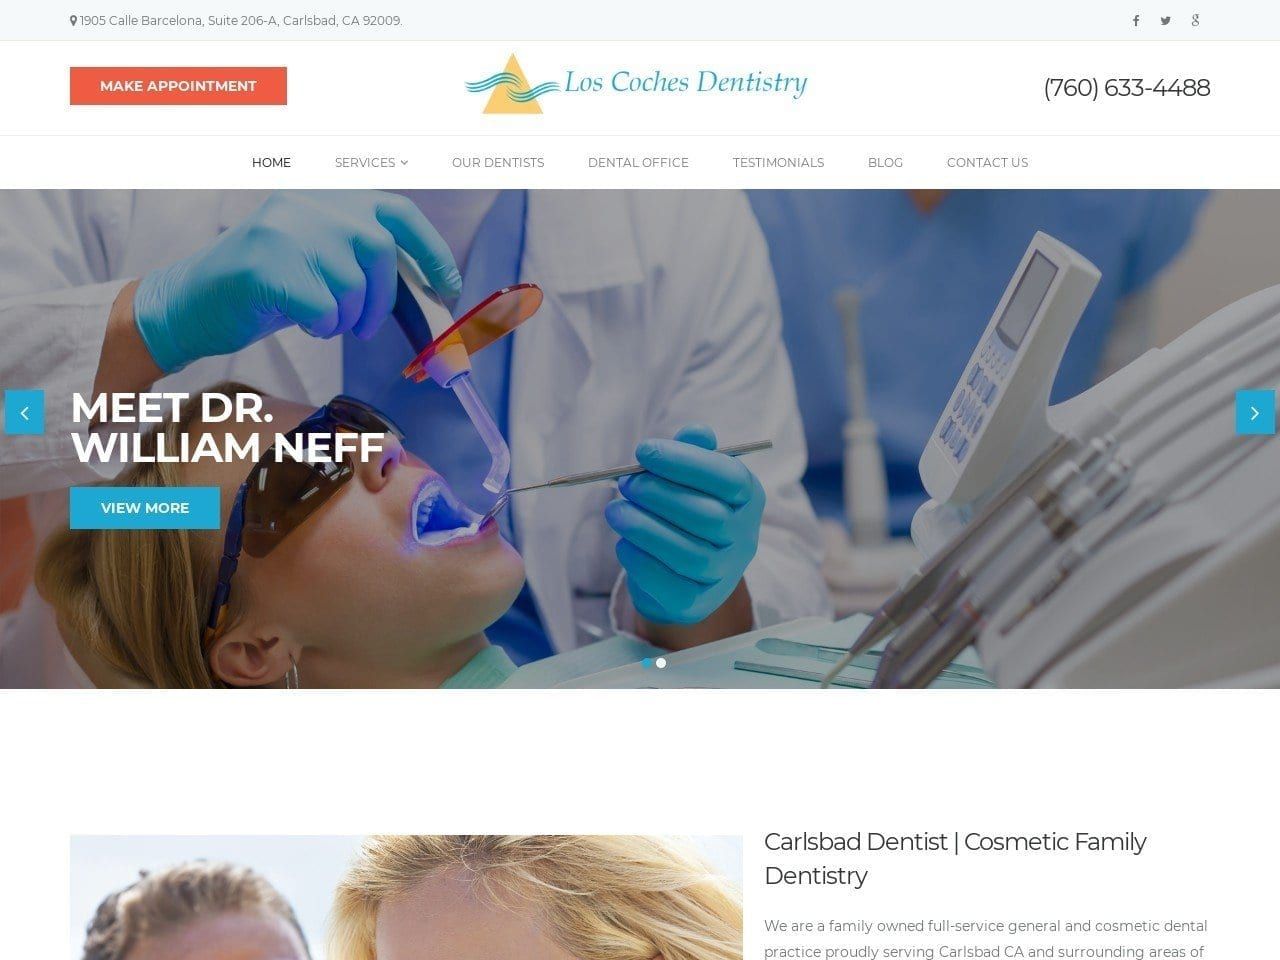 Los Coches Dentist Website Screenshot from loscochesdentistry.com